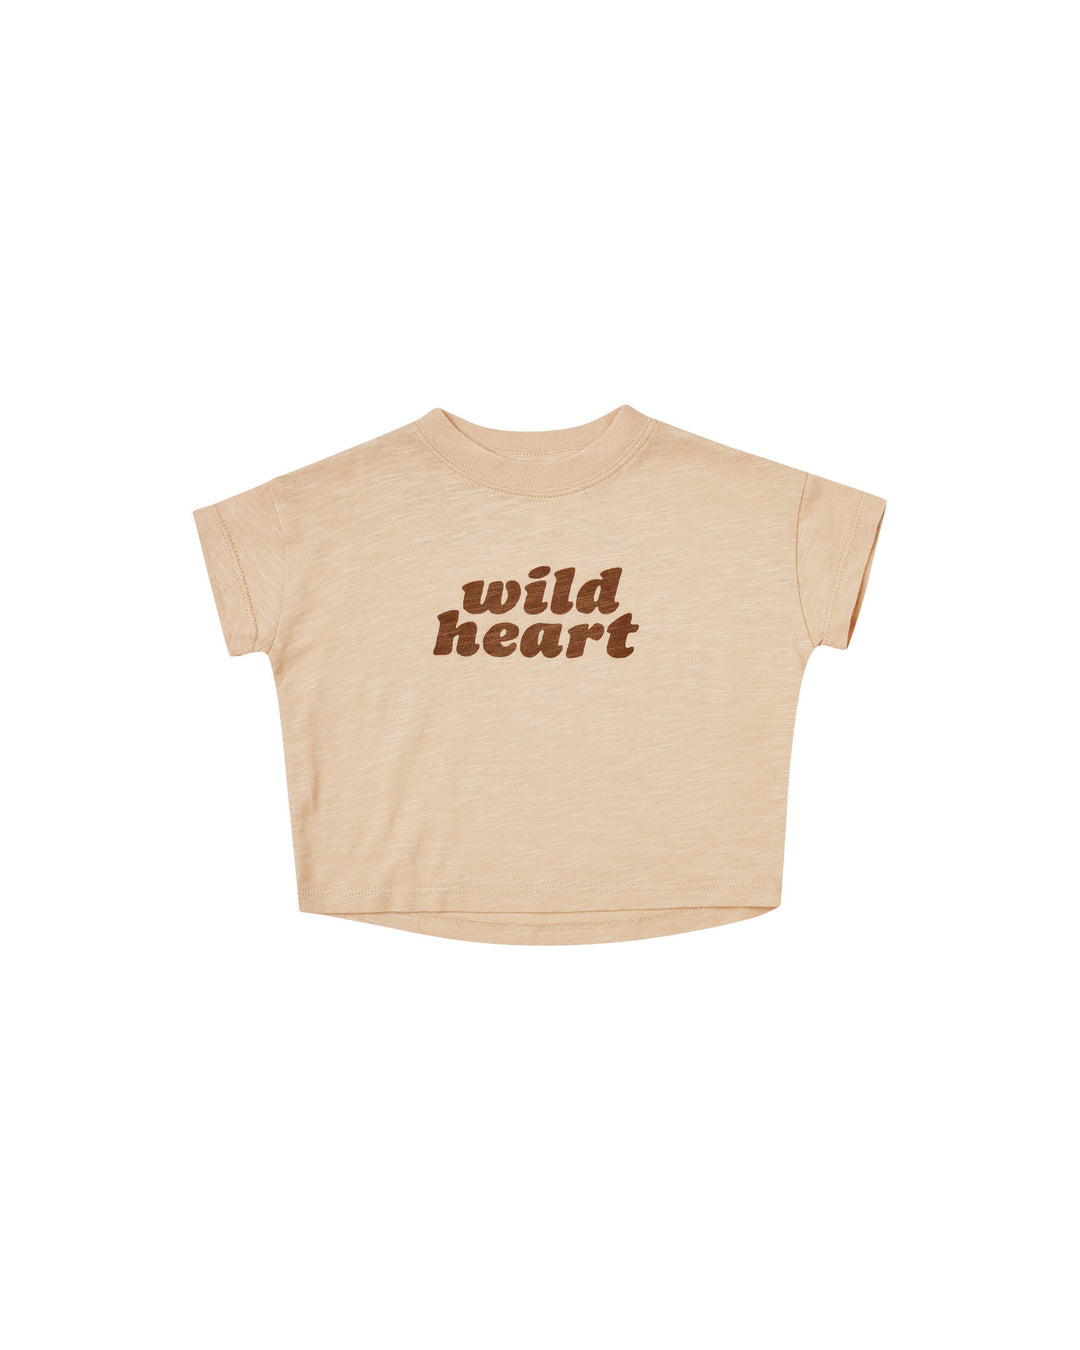 Wild Heart Boxy Tee by Rylee + Cru